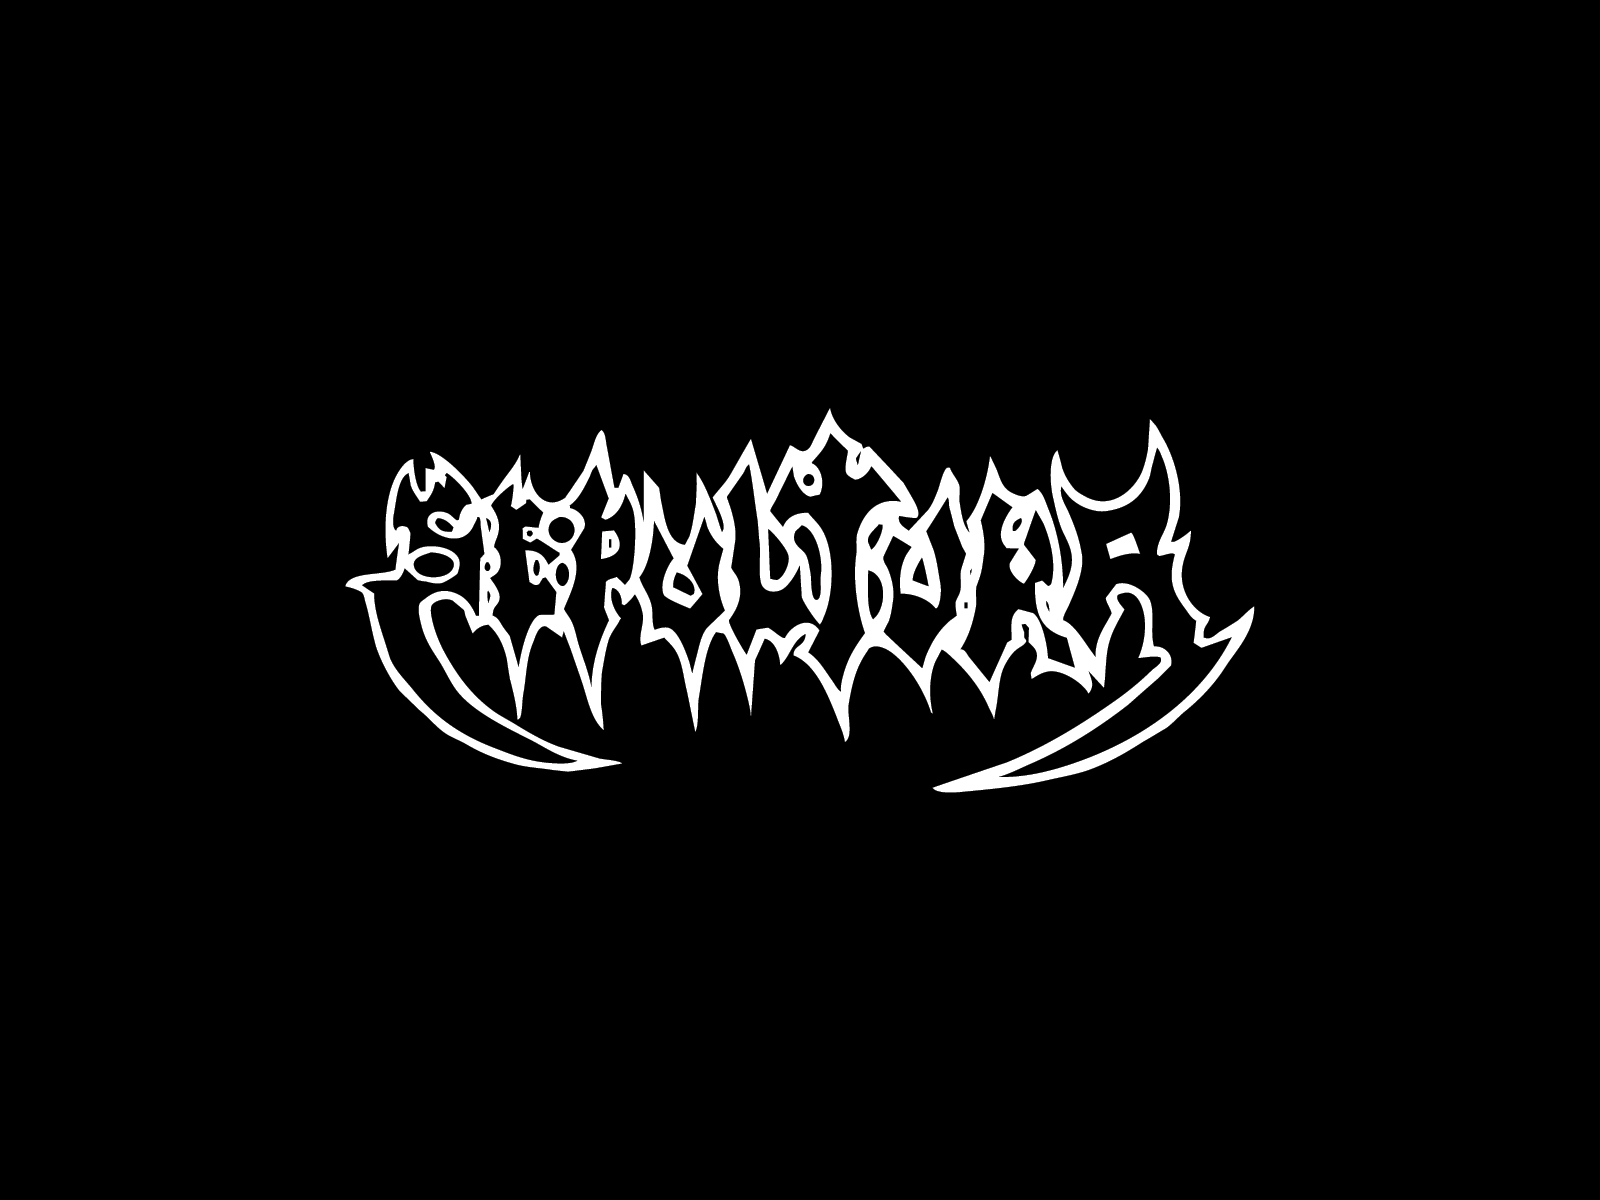 Sepultura Logo Wallpaper Of Metal Band